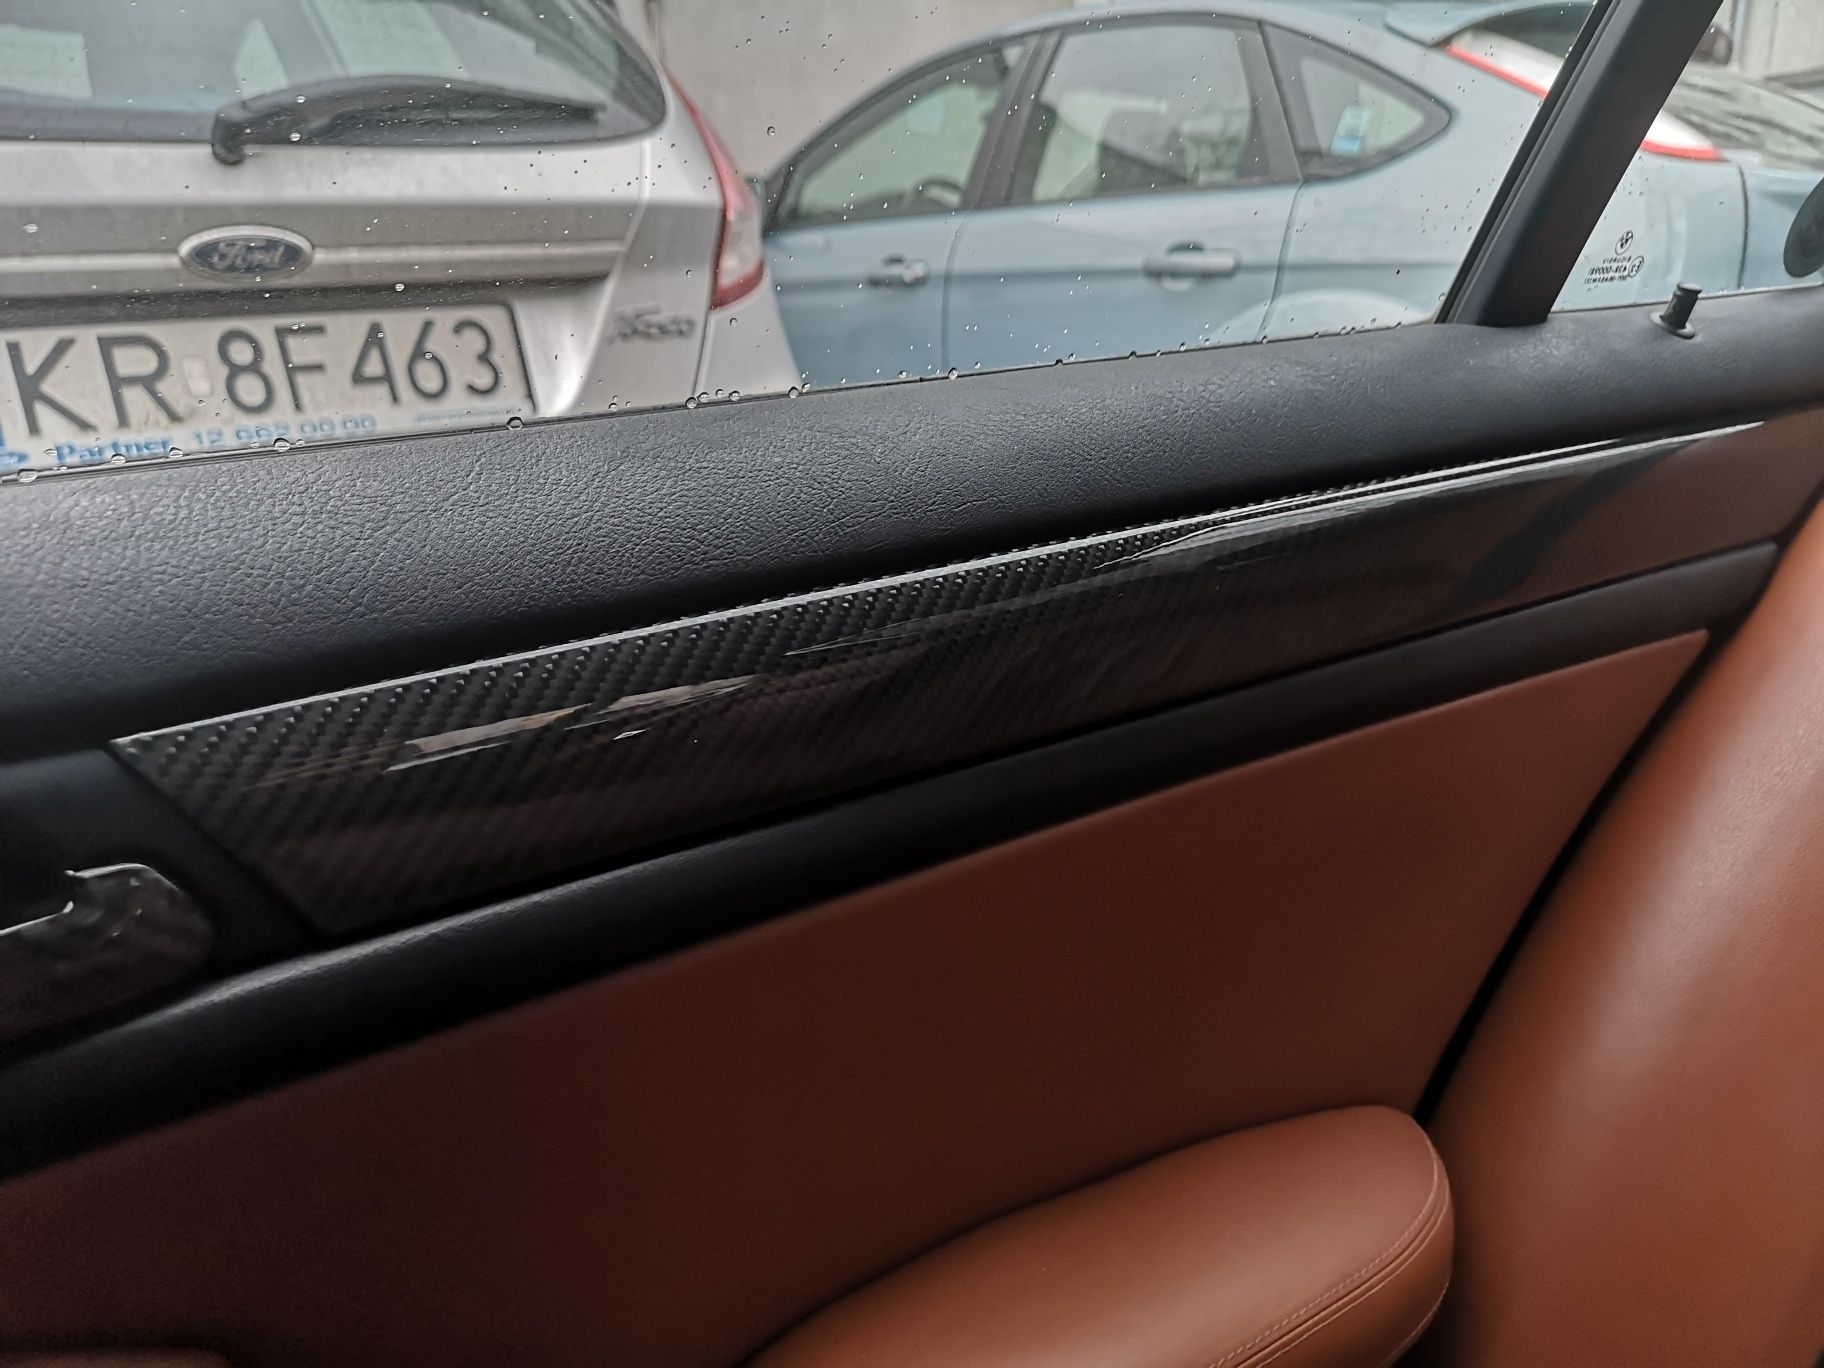 E46 real carbon listwy dekory sedan touring eu karbon wlókno weglowe